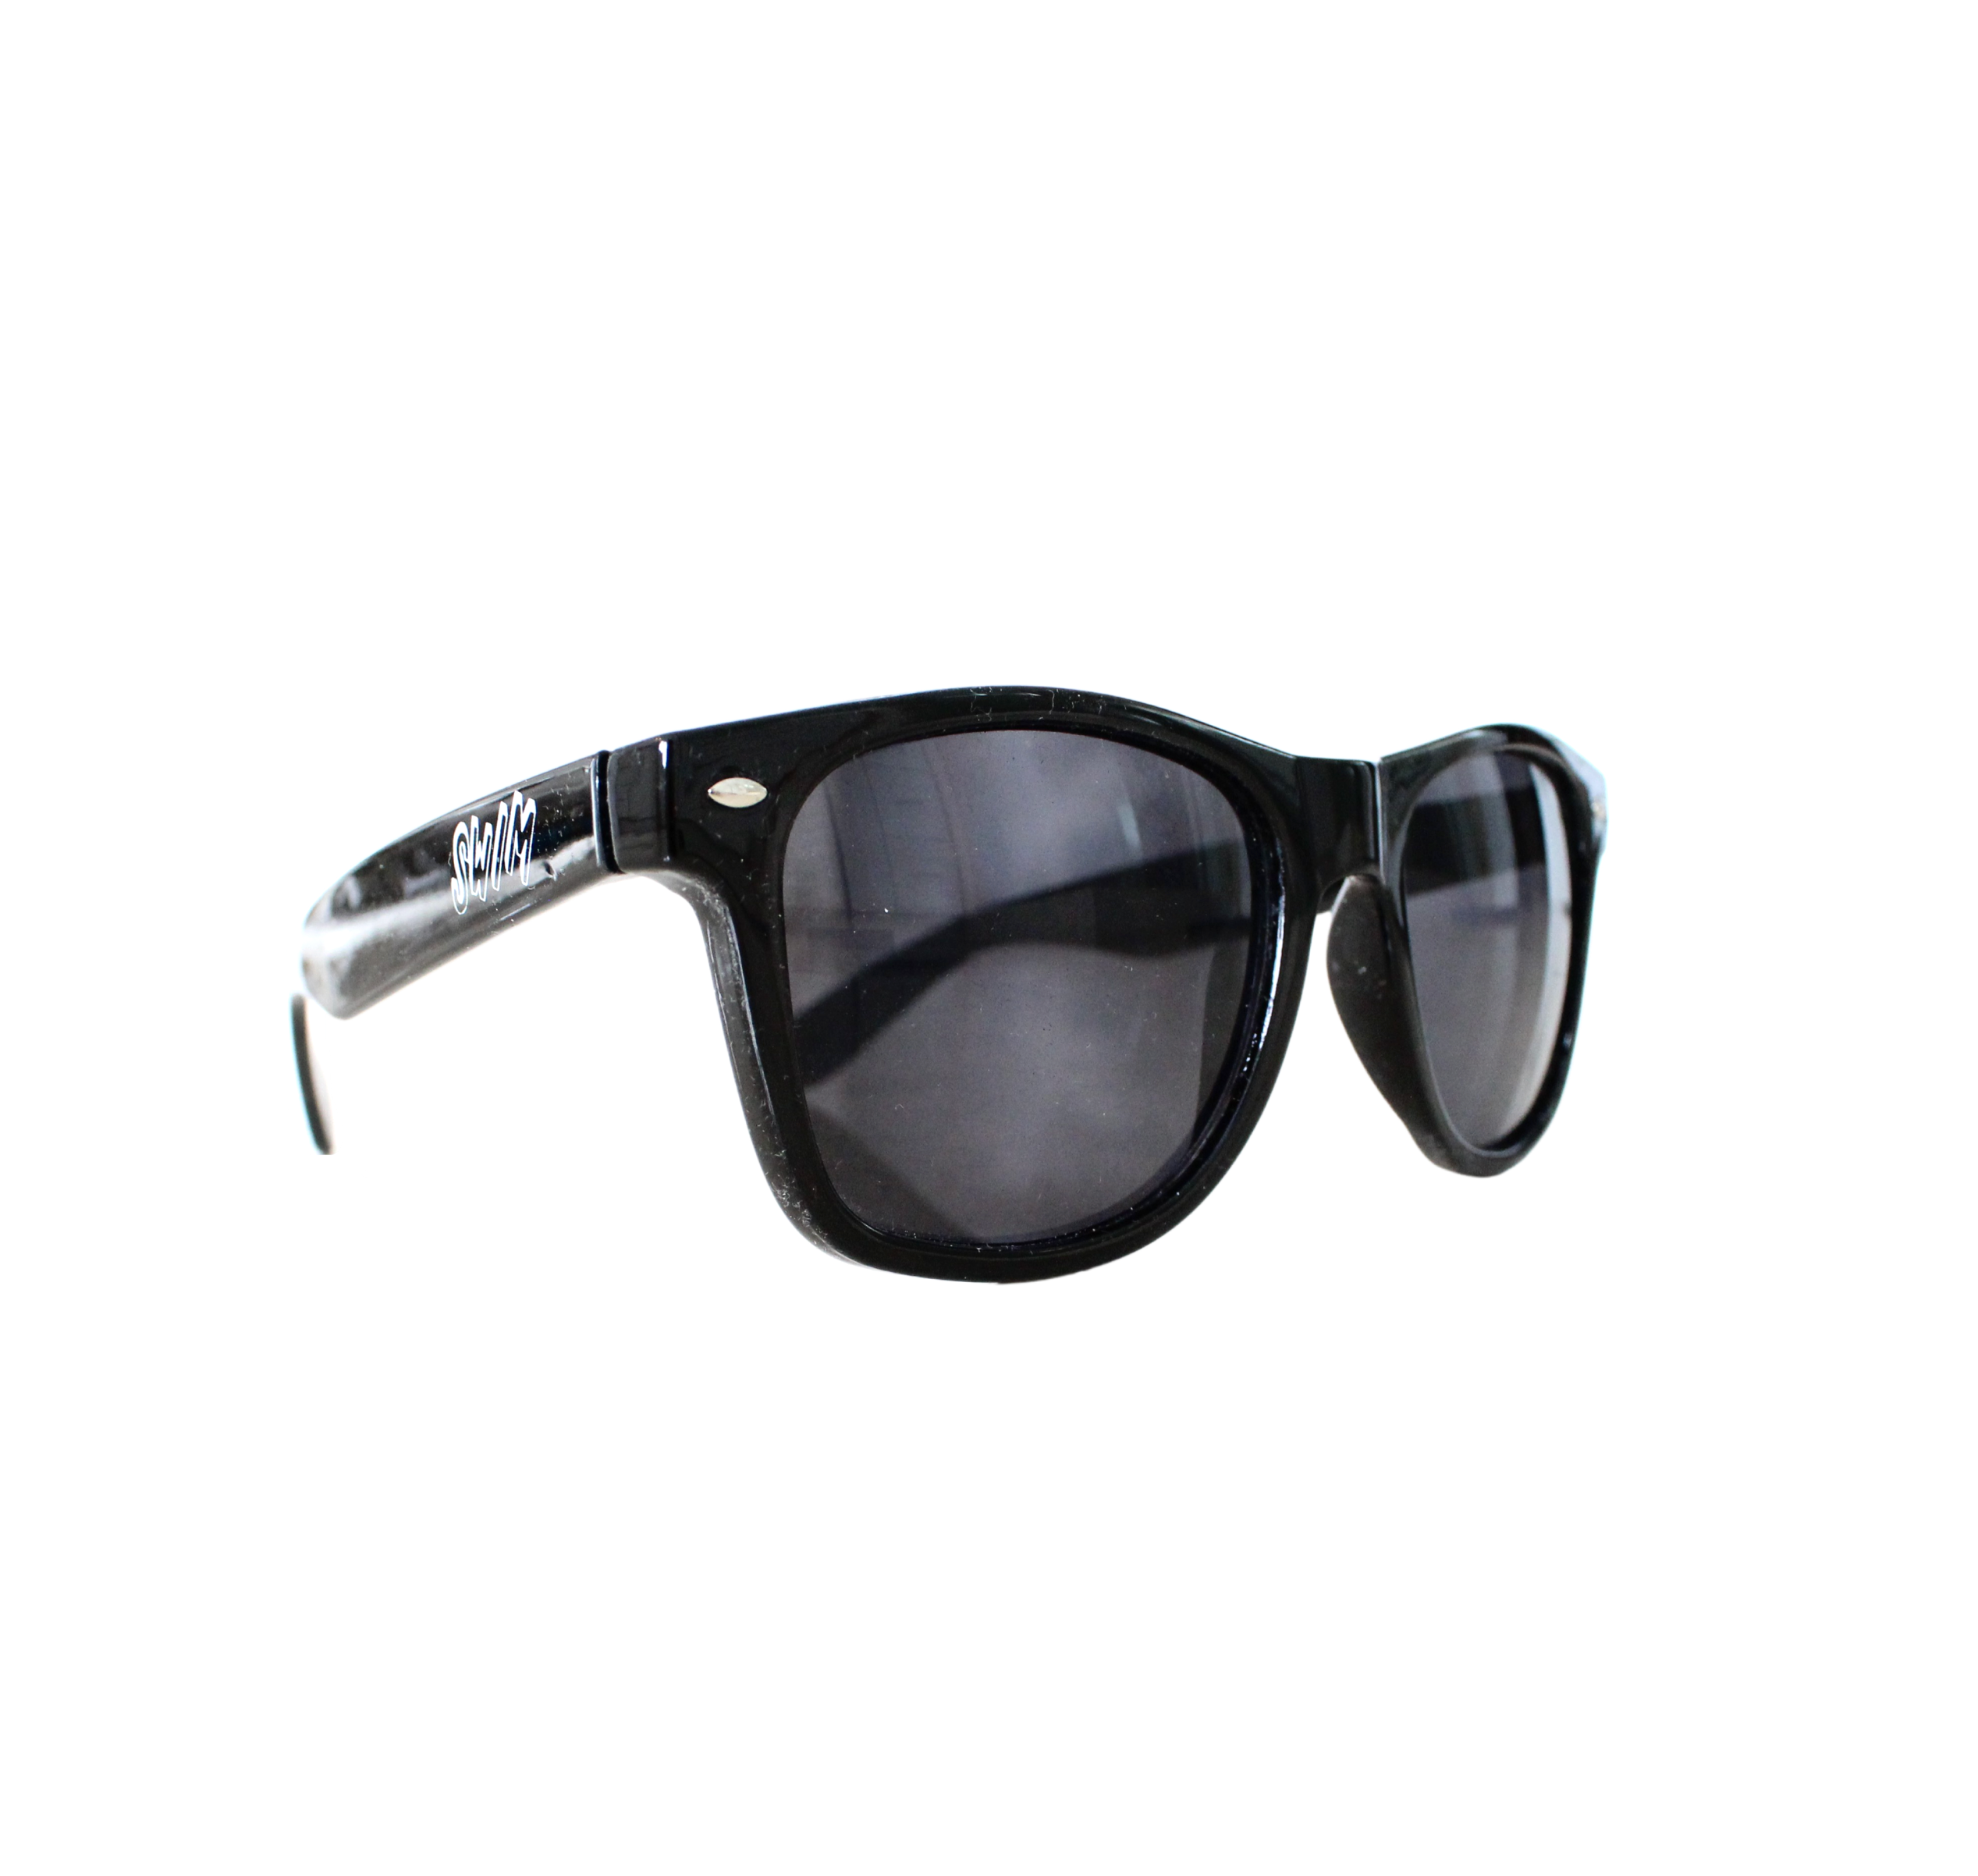 Fred Schneider's Sunglasses